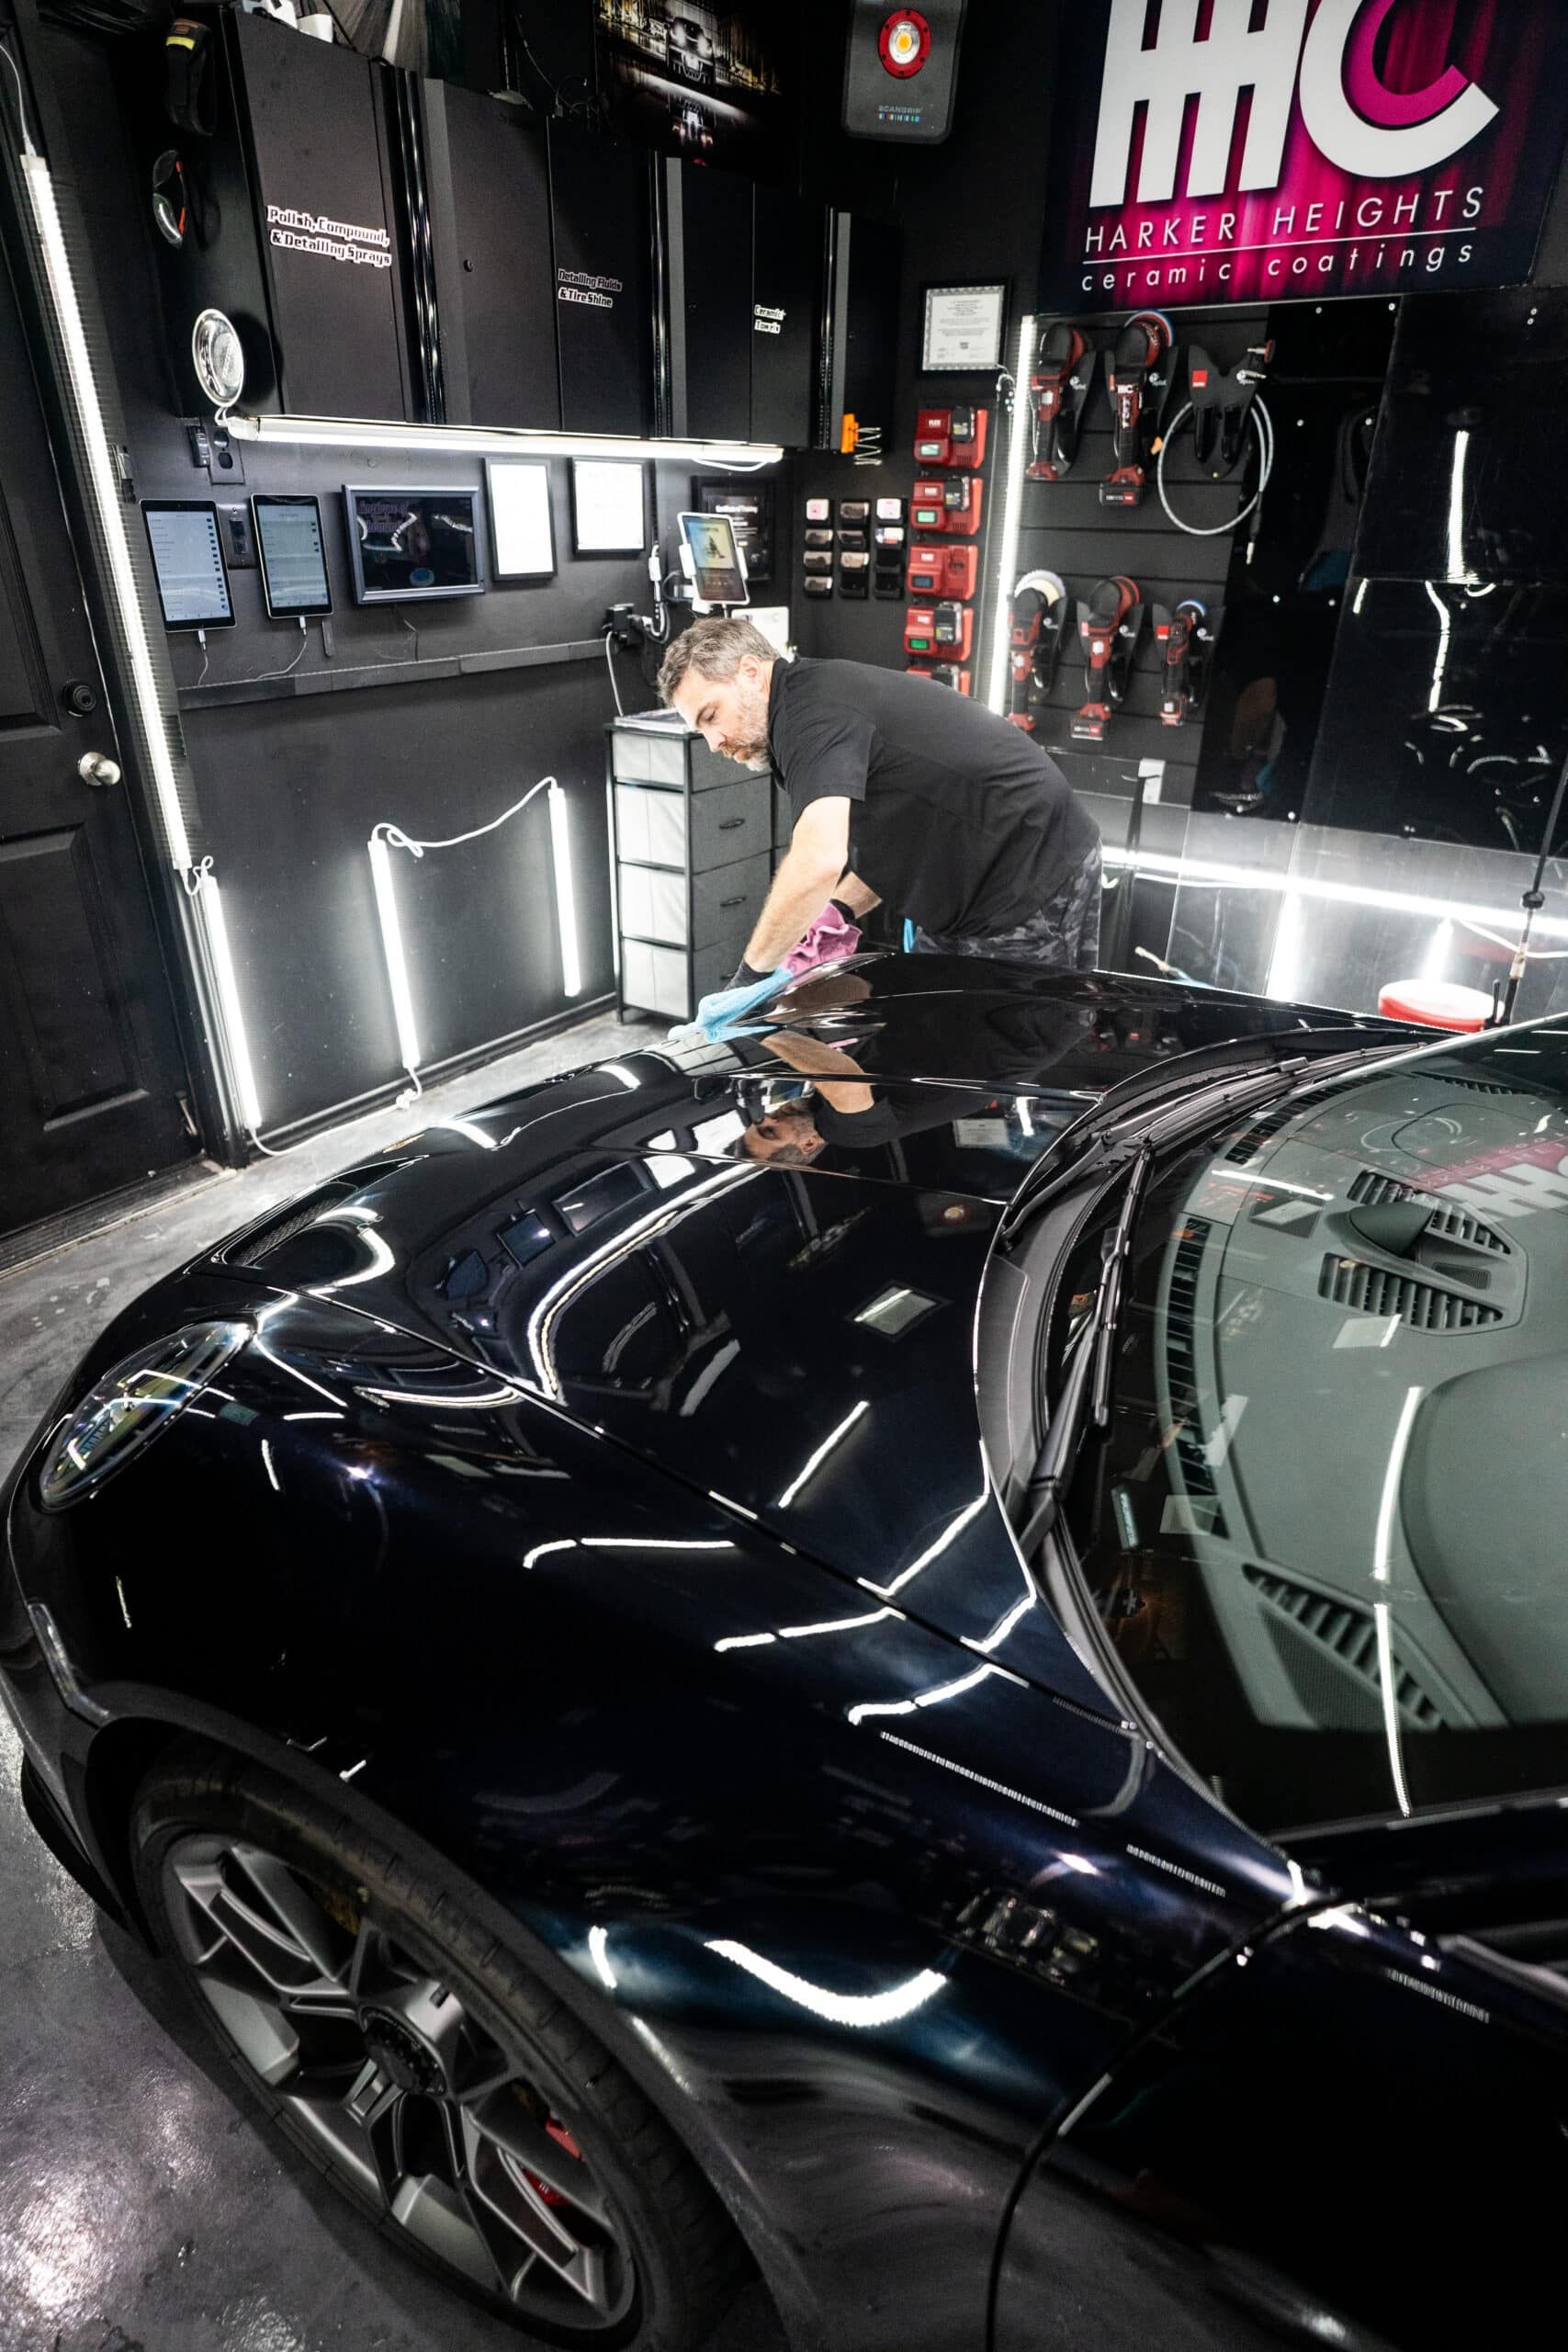 A man is polishing the hood of a black car in a garage.